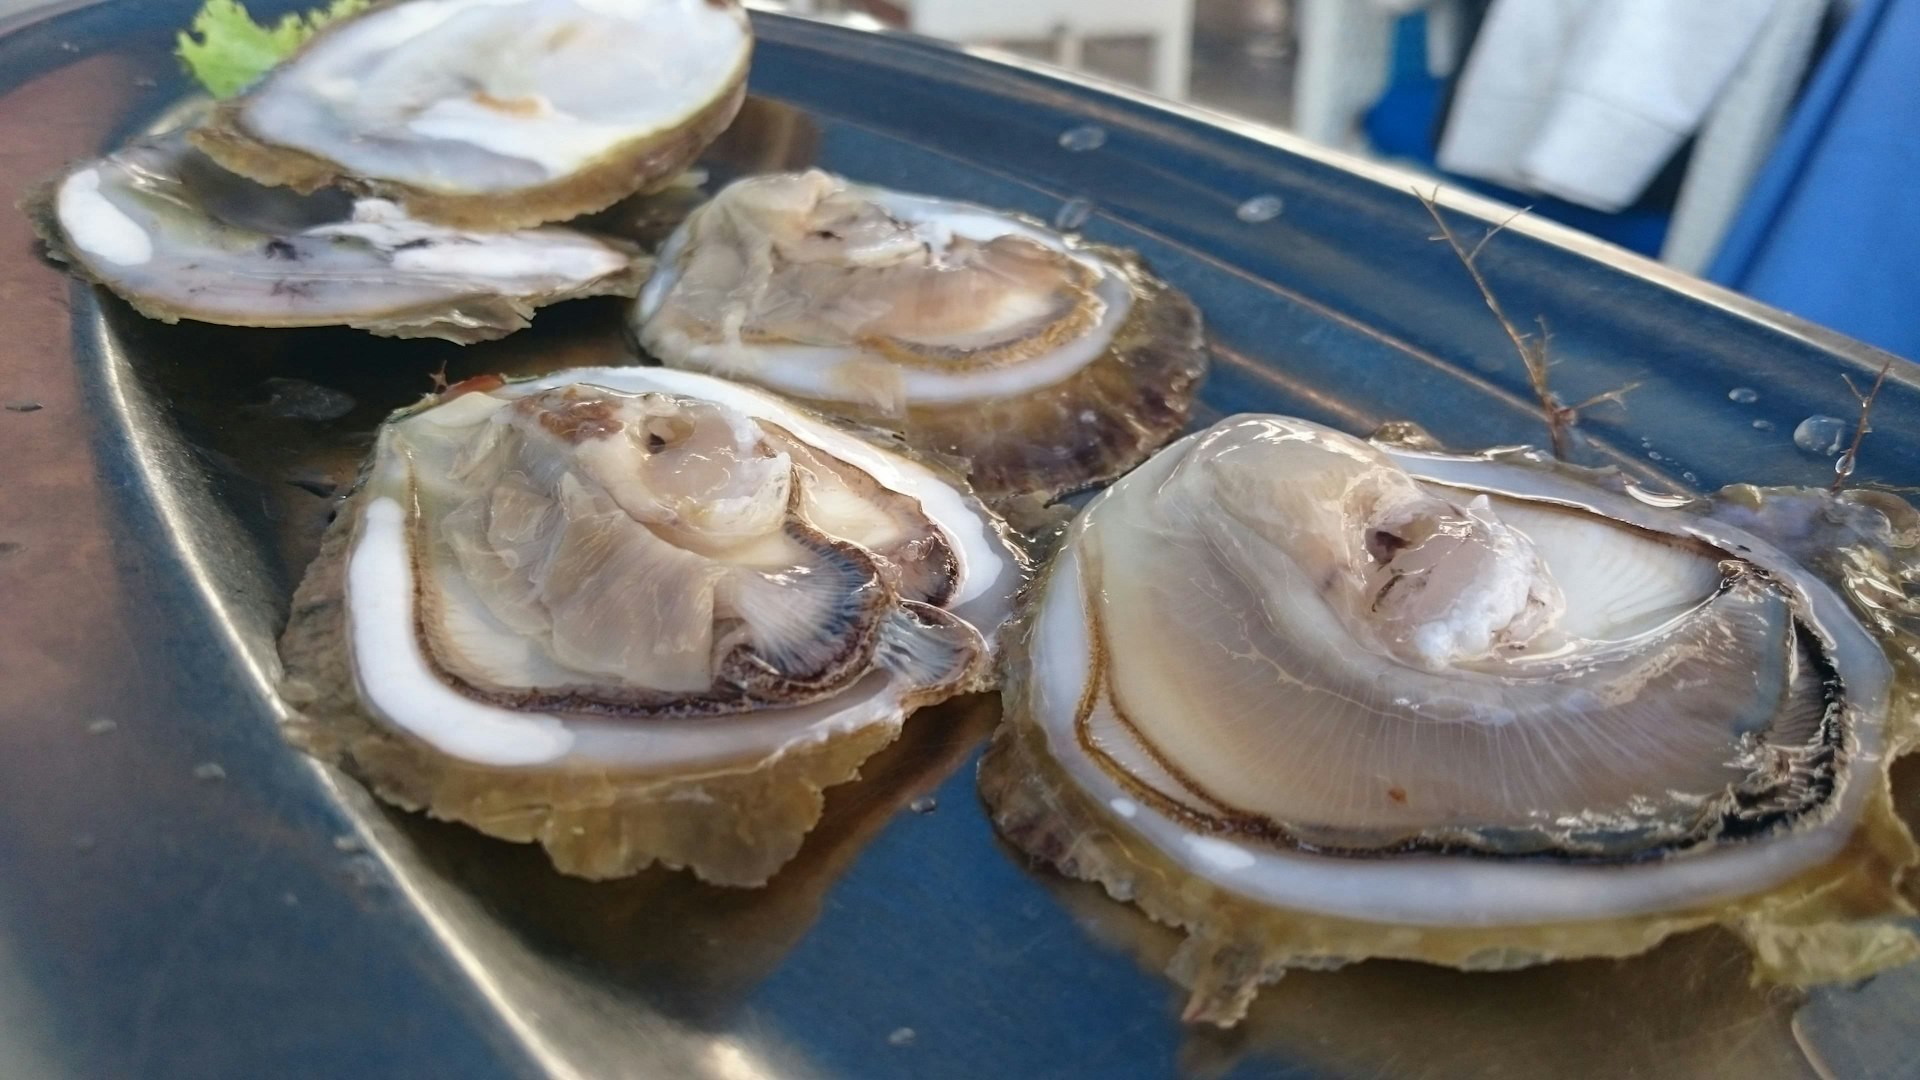 A plate of ston oysters in Kamenice in Croatia